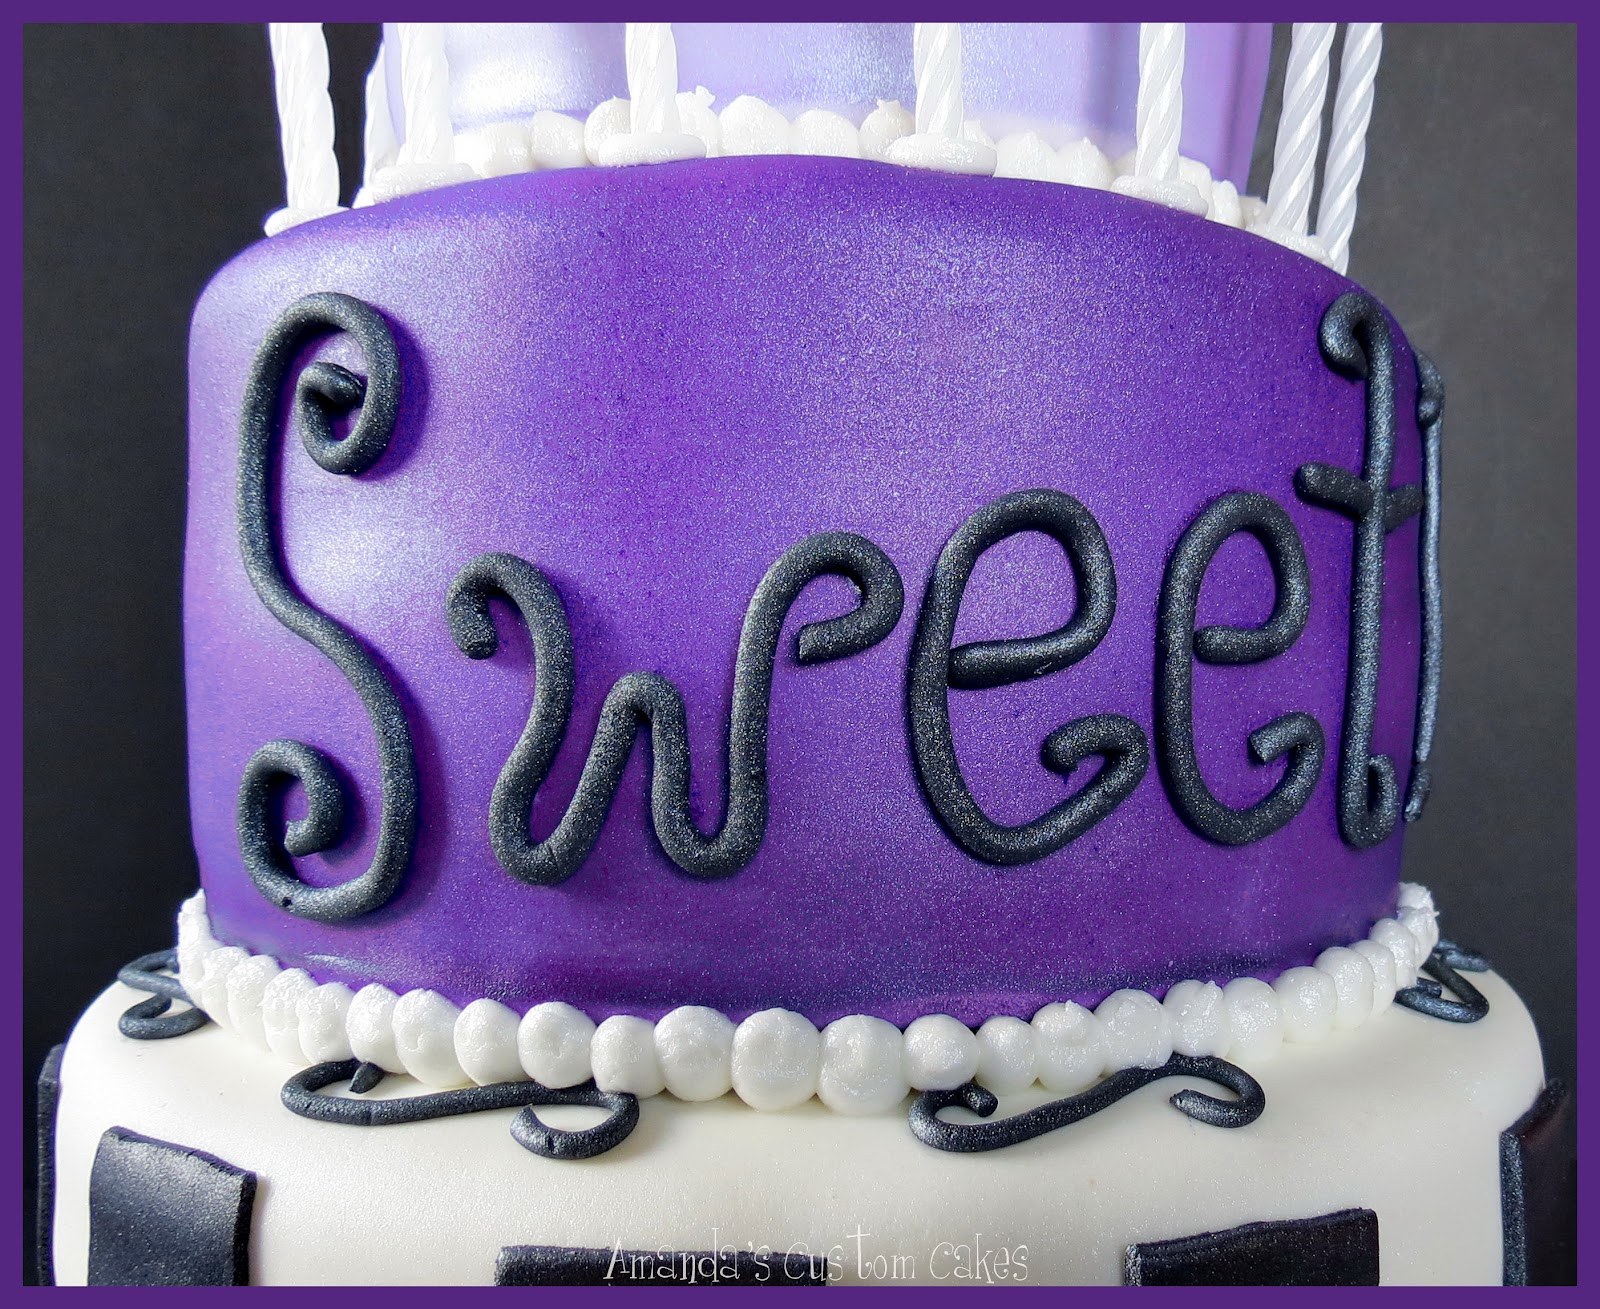 Amanda's Custom Cakes: Sweet 16 Cake